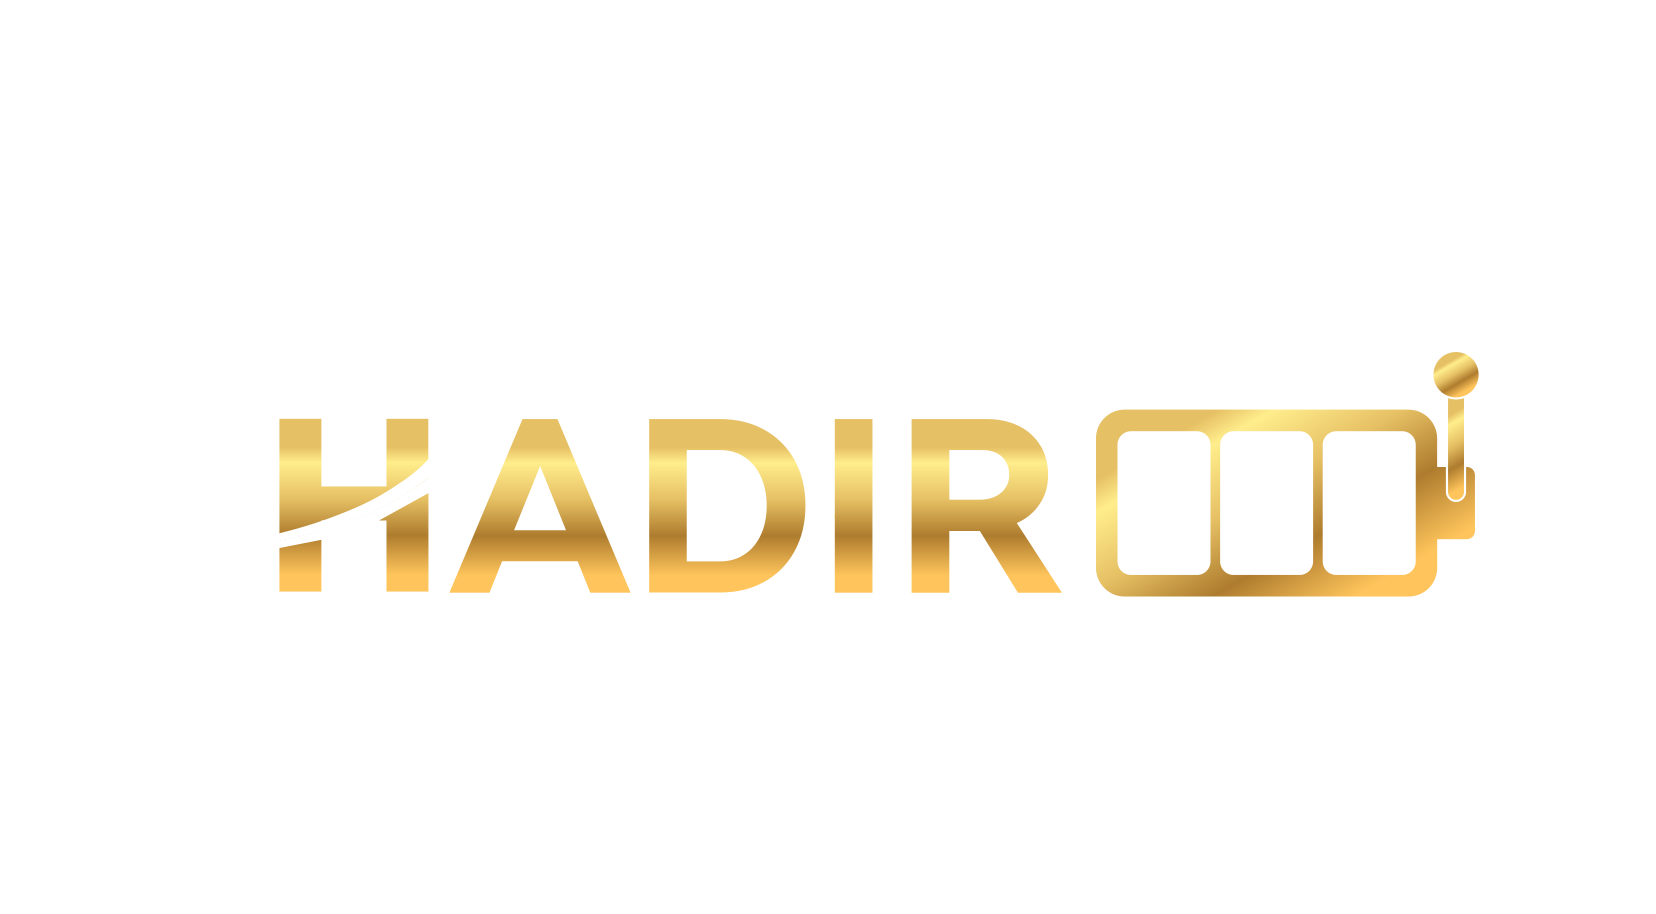 HADIR777